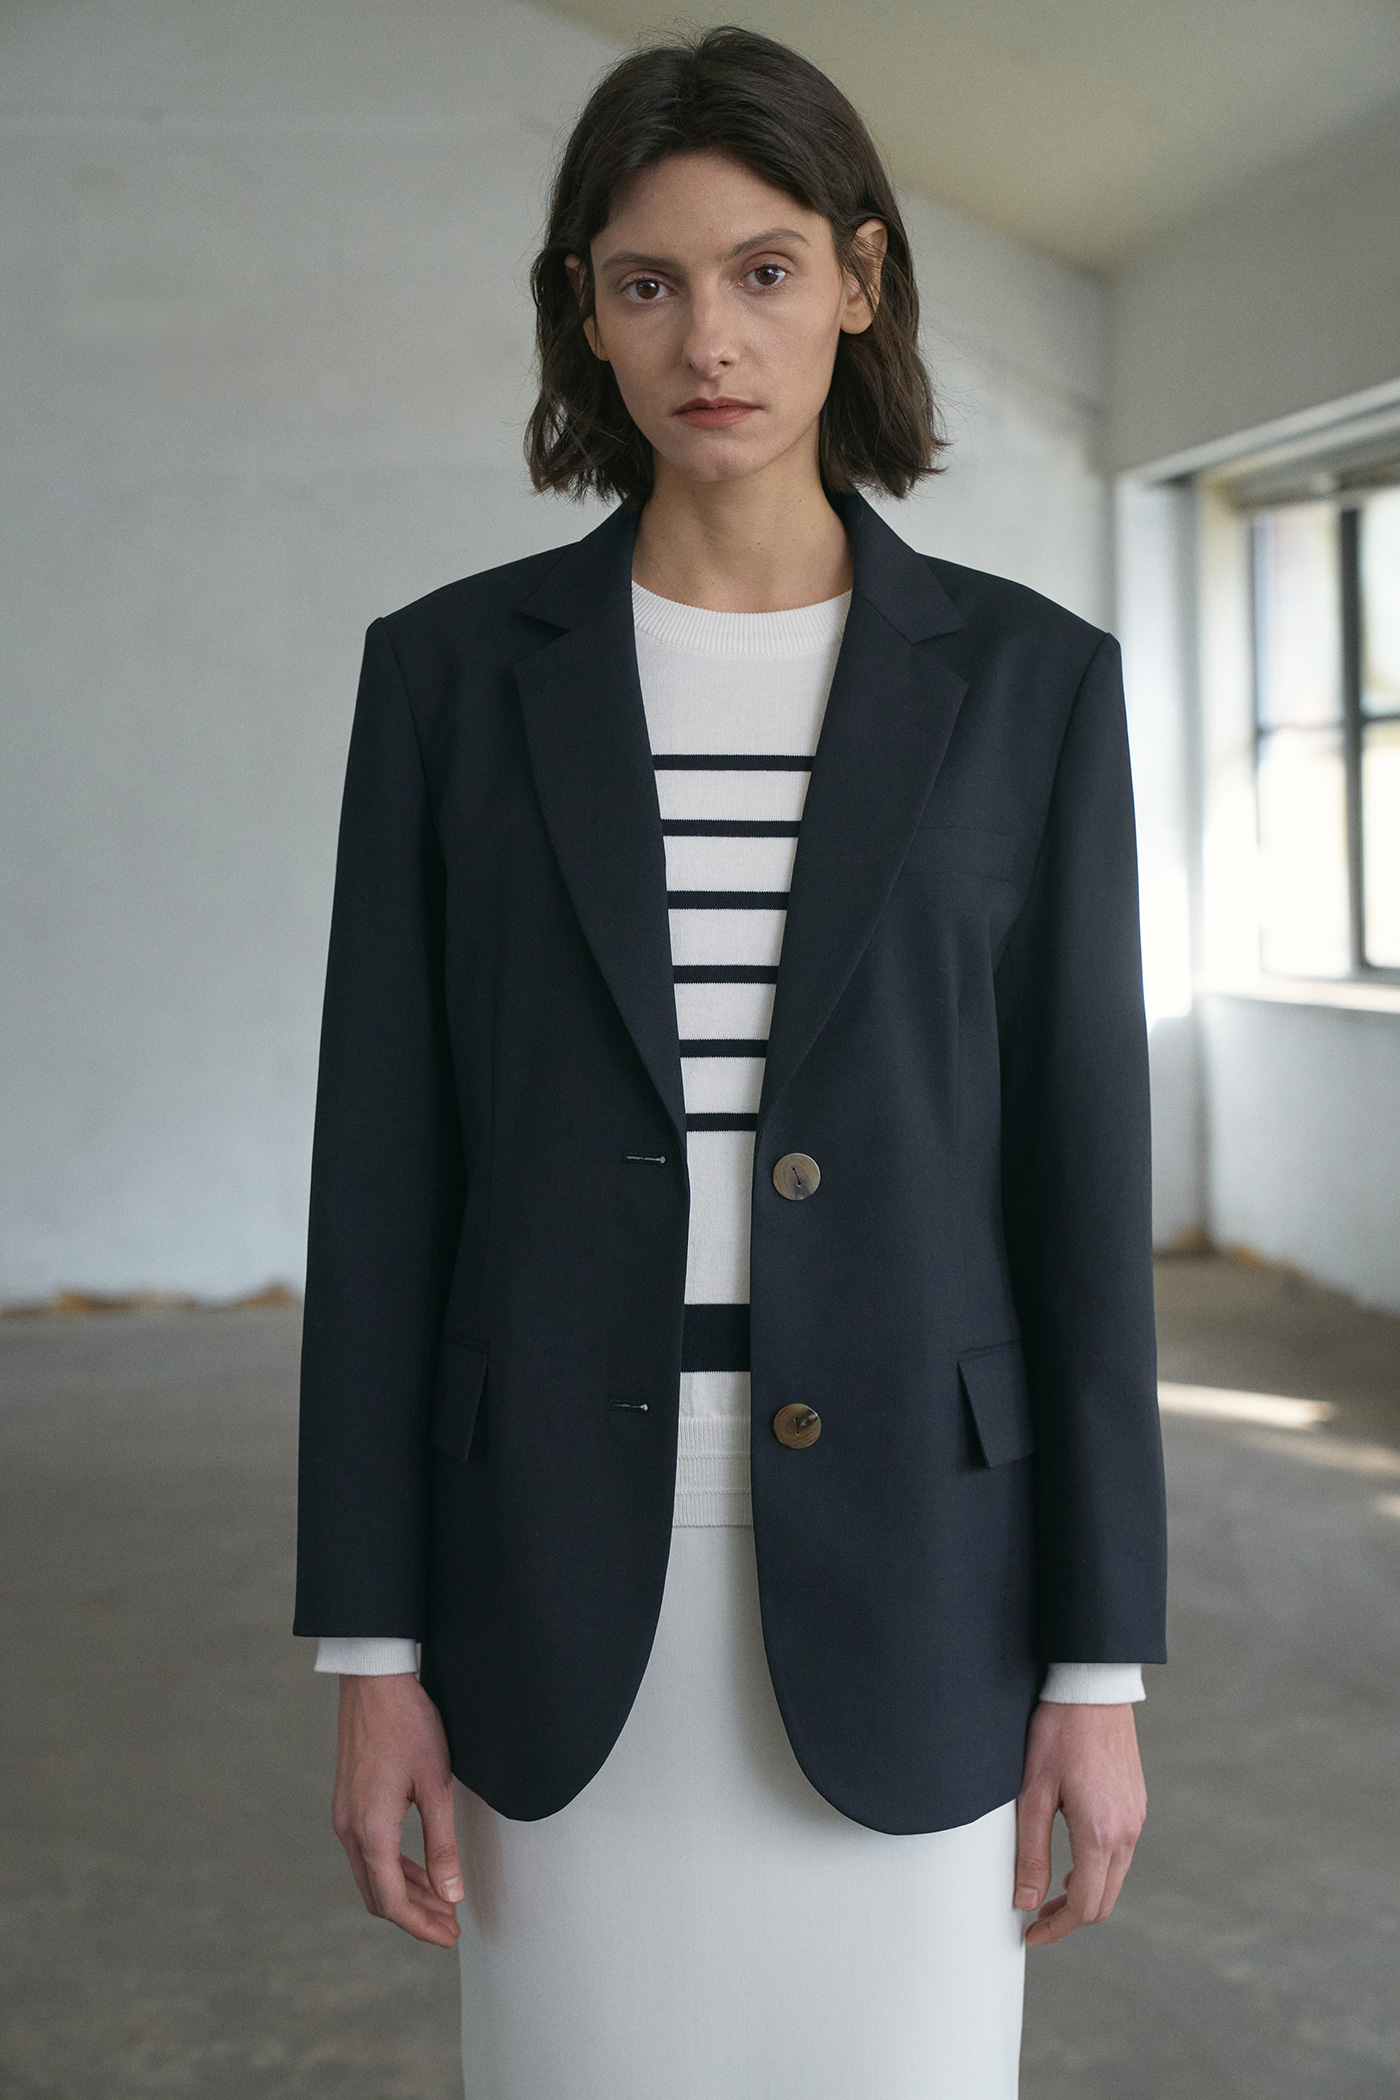 [SAMPLE]Wool blazer jacket-Navy